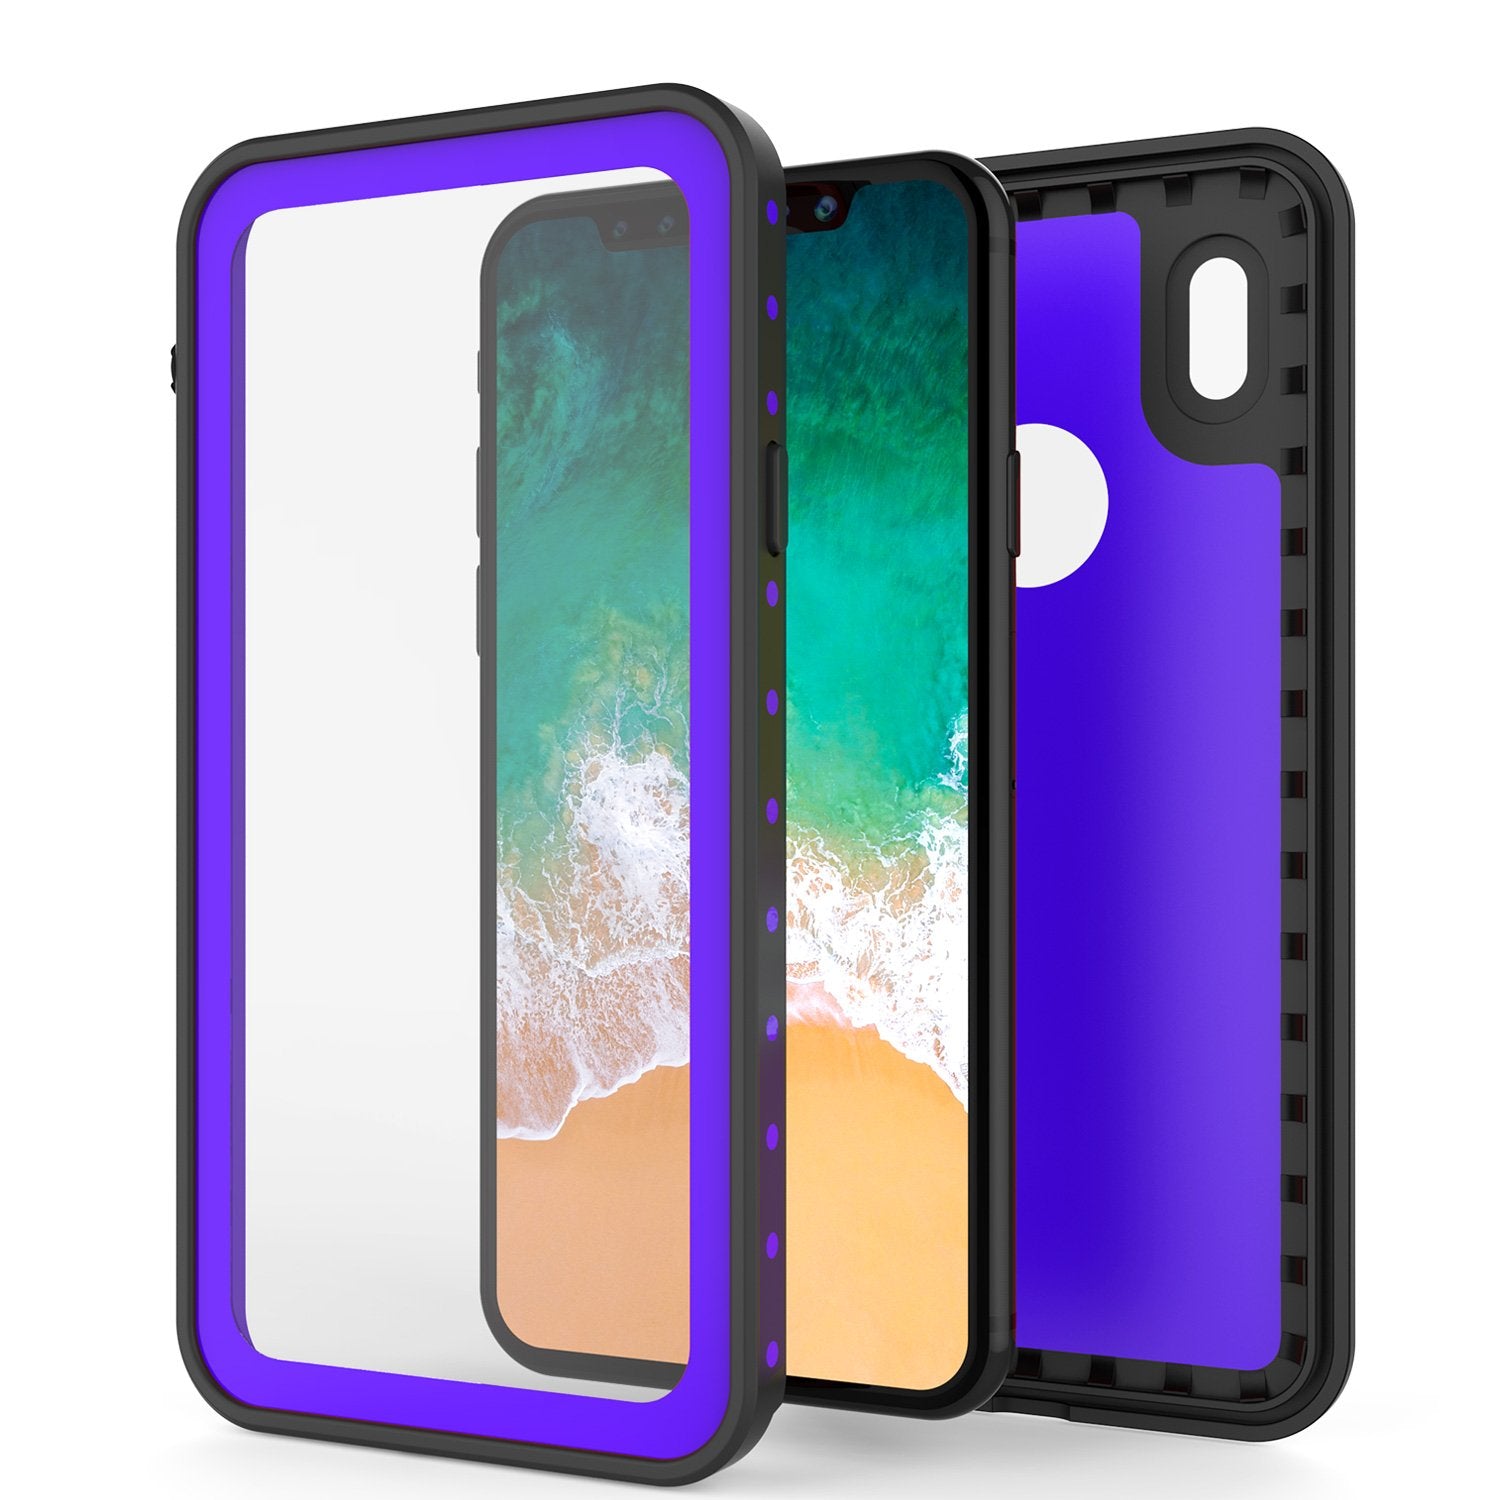 iPhone X Plus Waterproof Case, Punkcase StudStar Series Cover, Purple